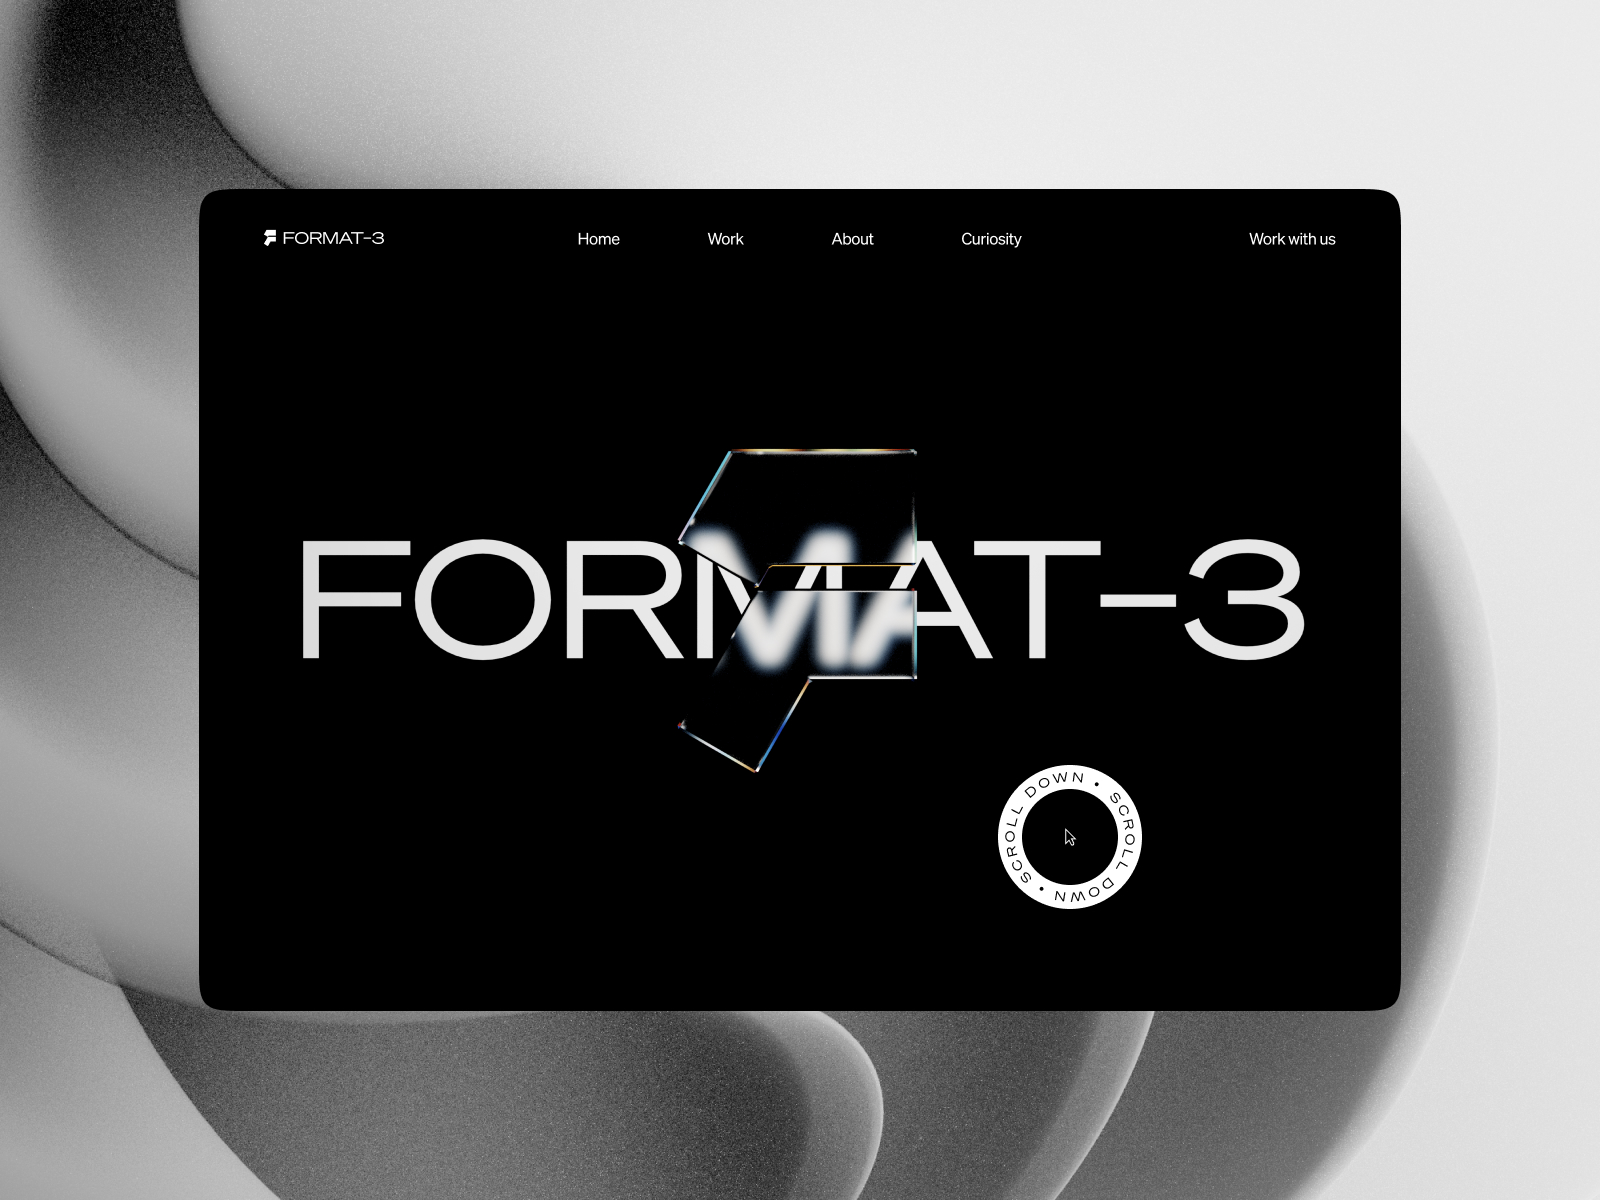 FORMAT-3